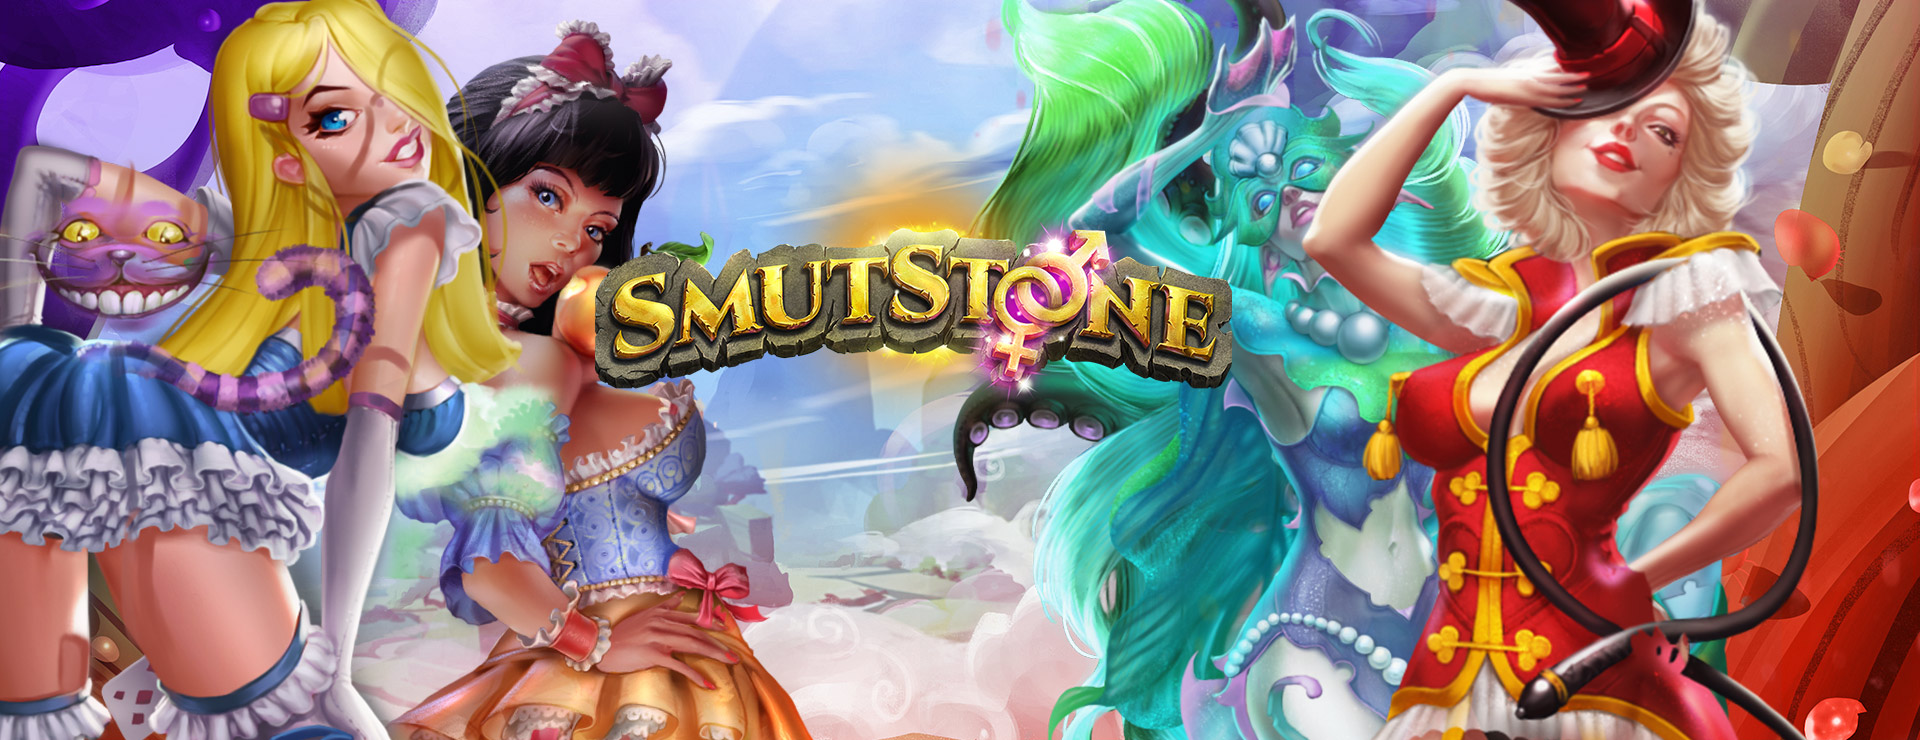 Smutstone Game - Roman Visuel Jeu